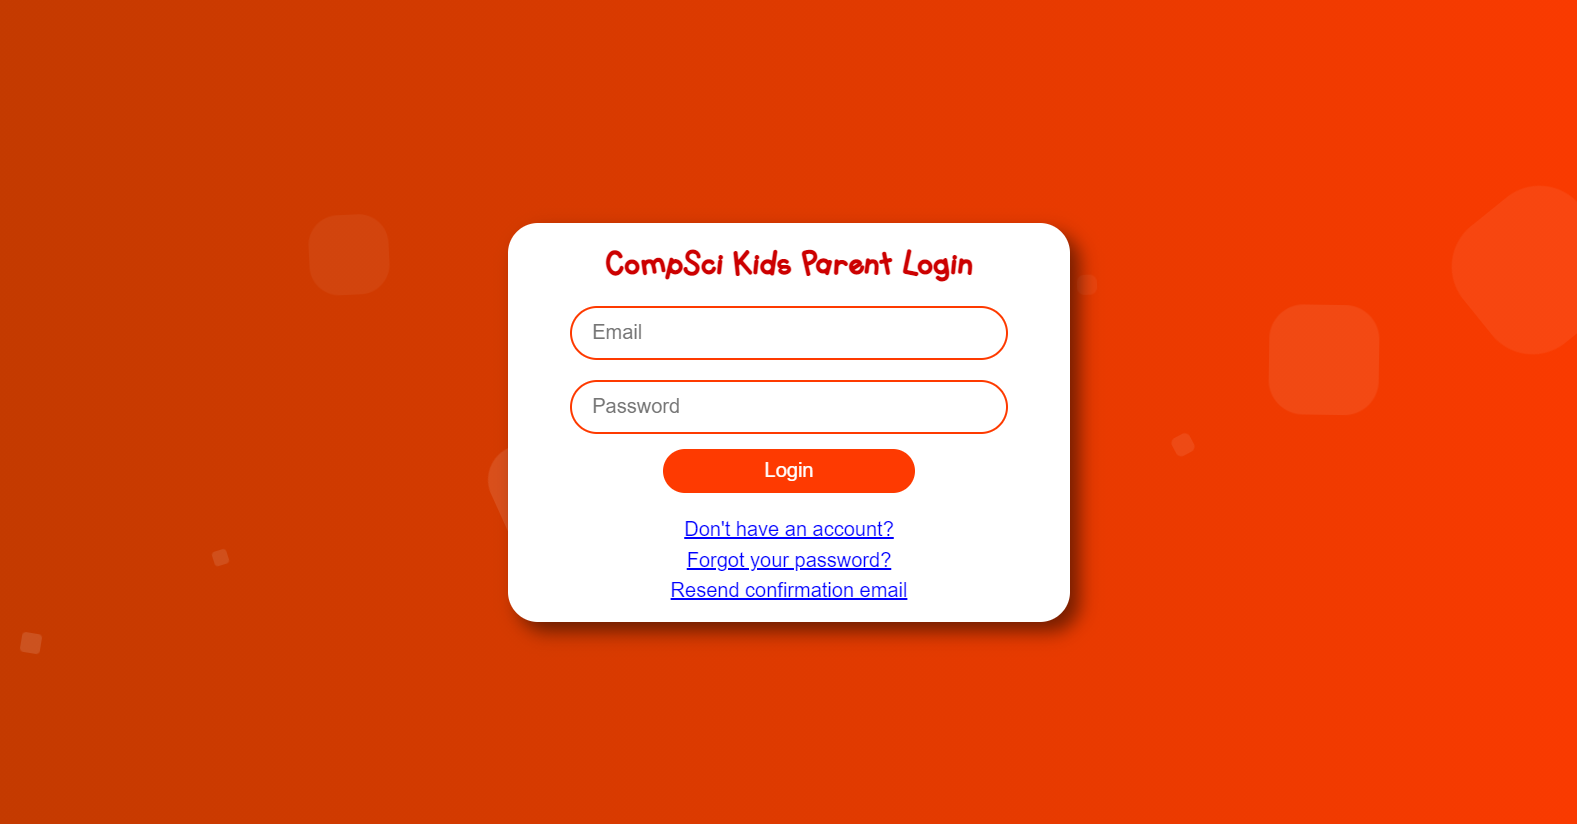 CompSci Kids Portal